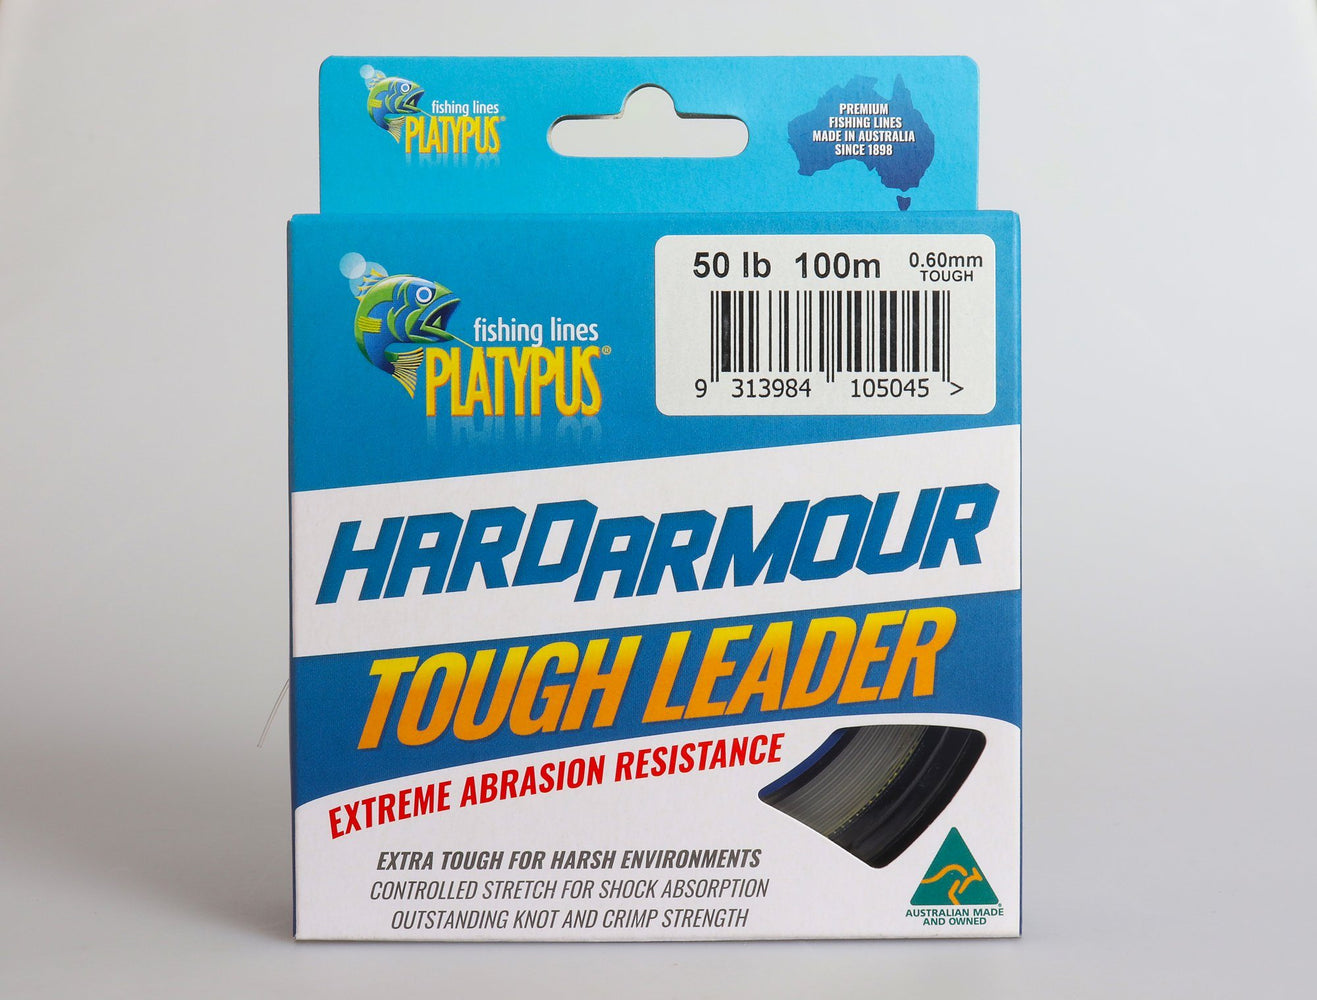 Platypus Hard Armour Tough Leader Line